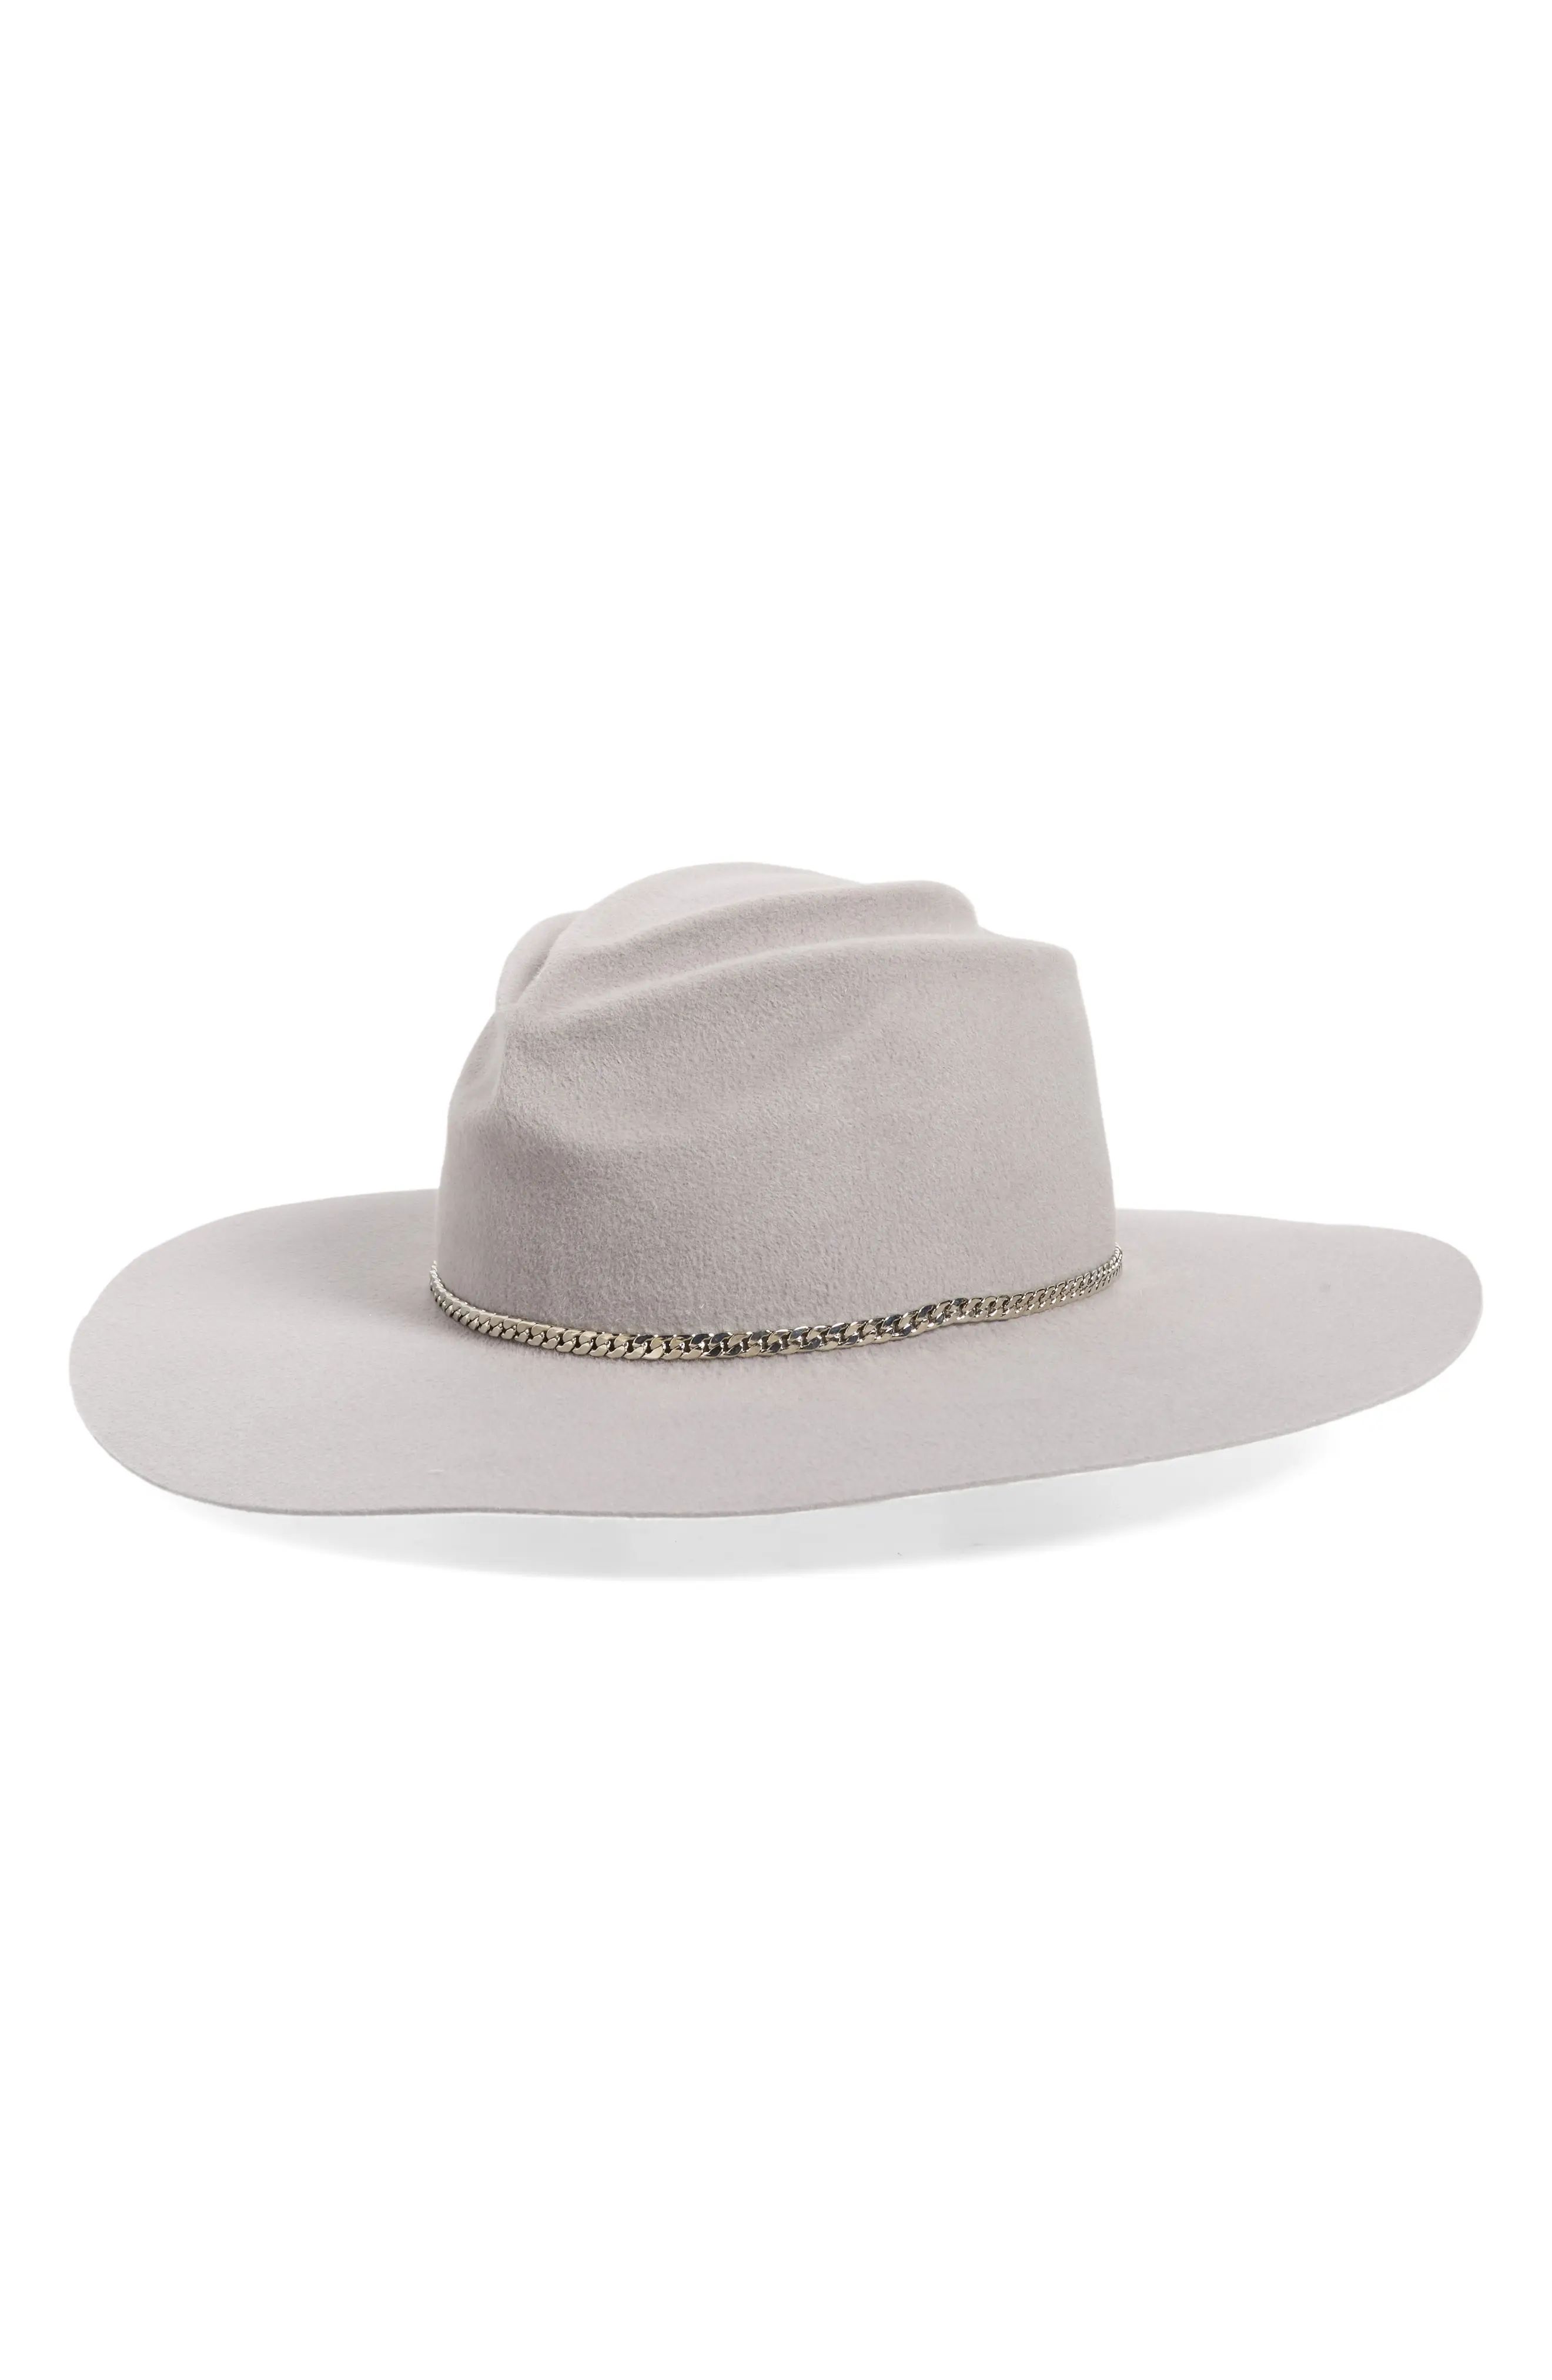 Gladys Tamez Mason Fur Felt Wide Brim Hat in Light Grey at Nordstrom, Size Small | Nordstrom